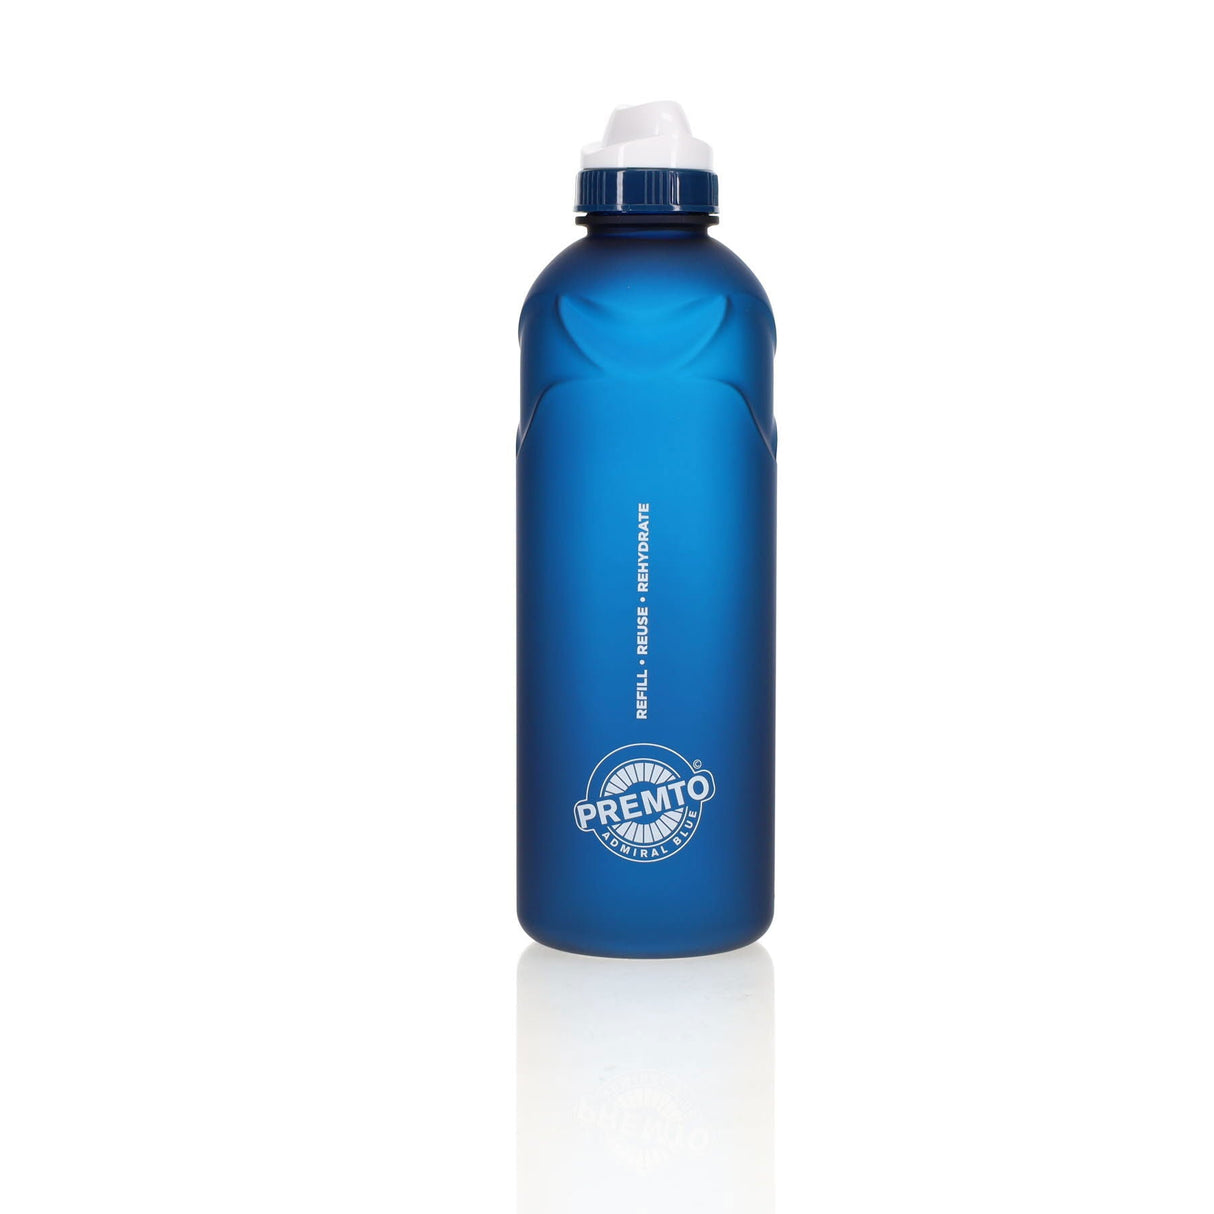 Premto 750ml Stealth Soft Touch Bottle - Admiral Blue | Stationery Shop UK